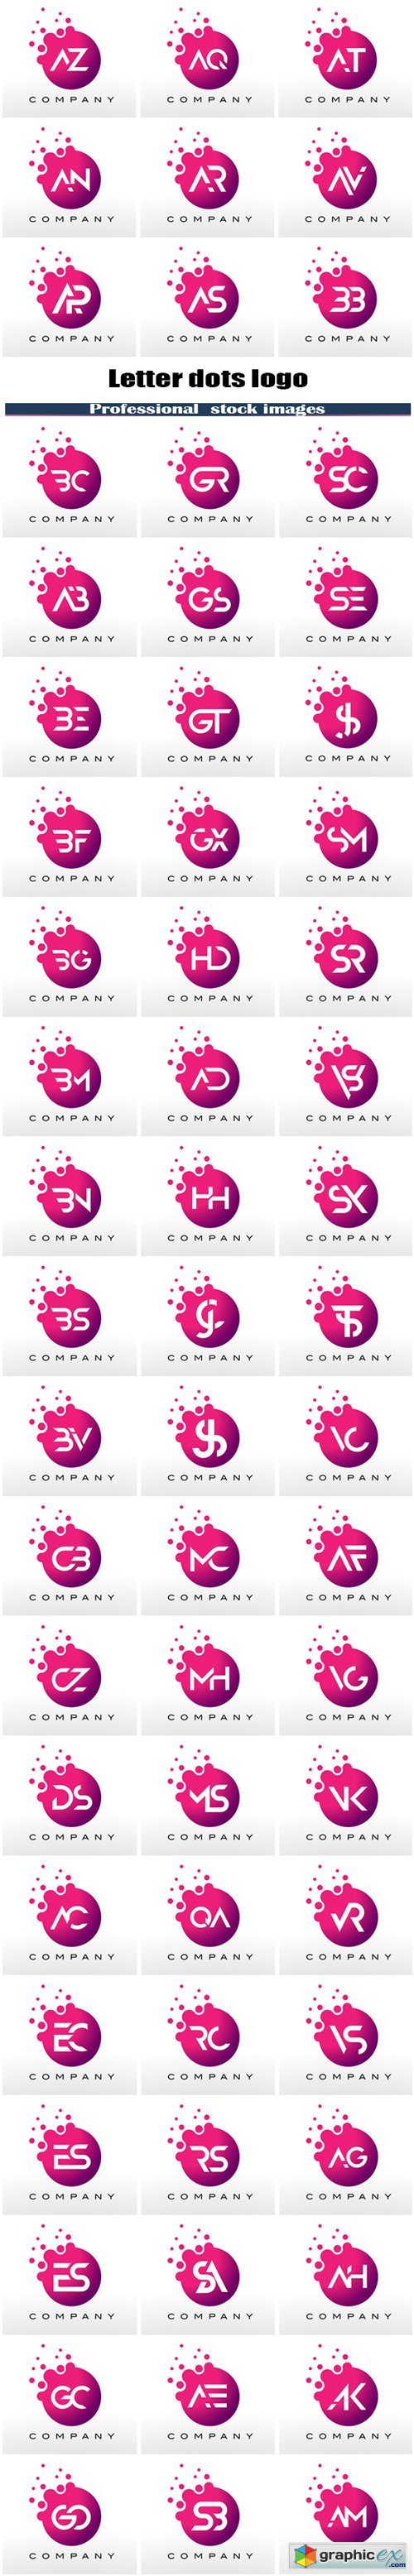 Letter dots logo design with creative trendy bubbles